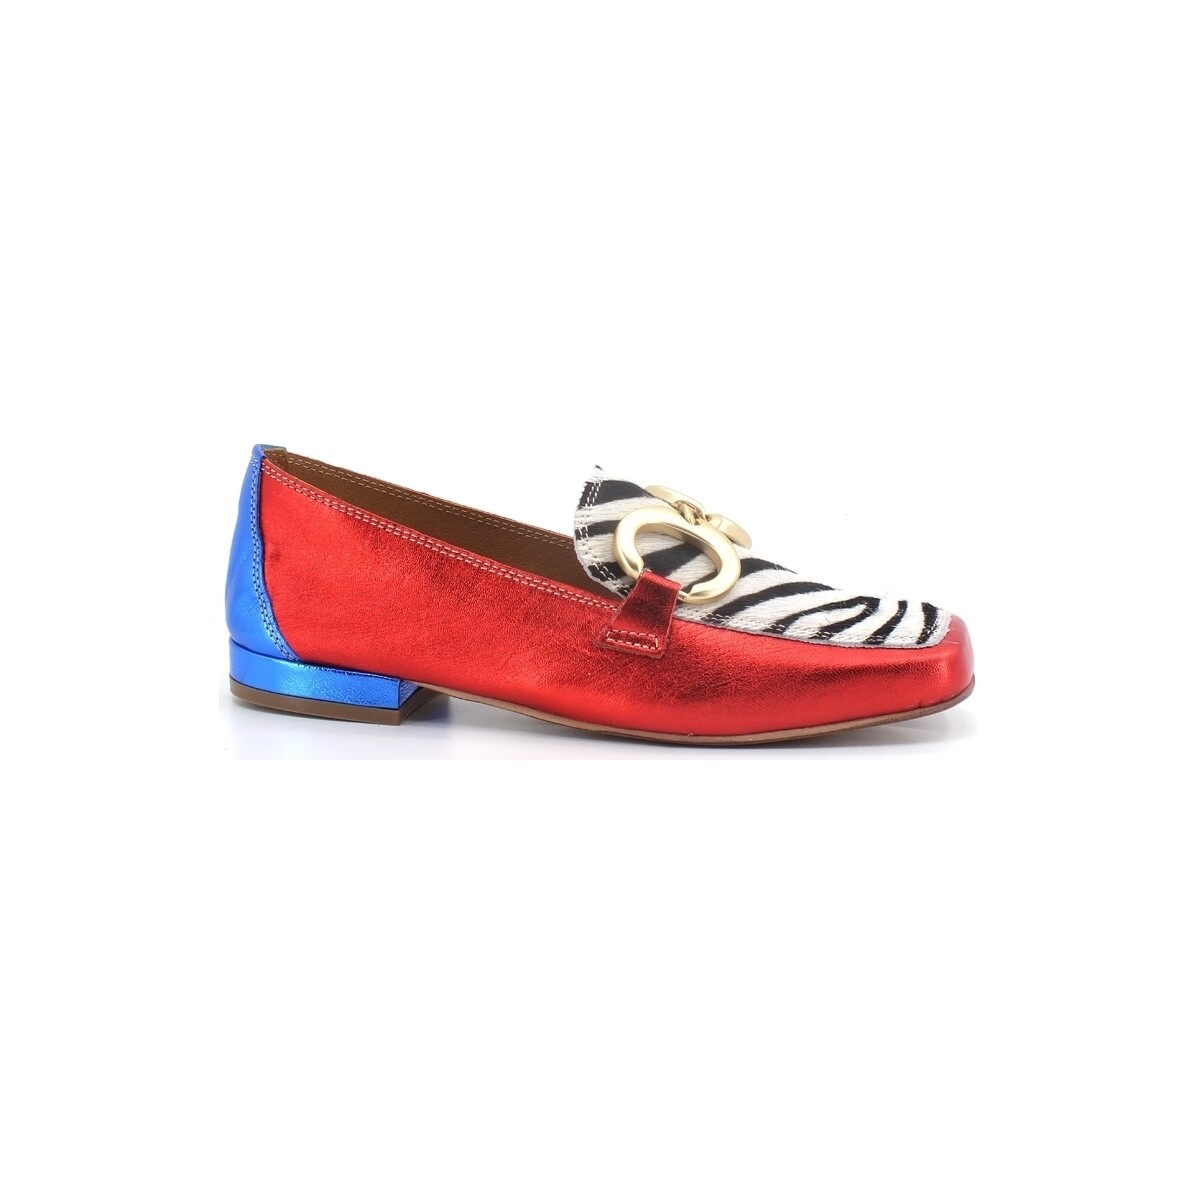 Chaussures Femme Voir les tailles Enfant Mocassino Suede Animalier Zebra Rosso Blu 832-17 Rouge